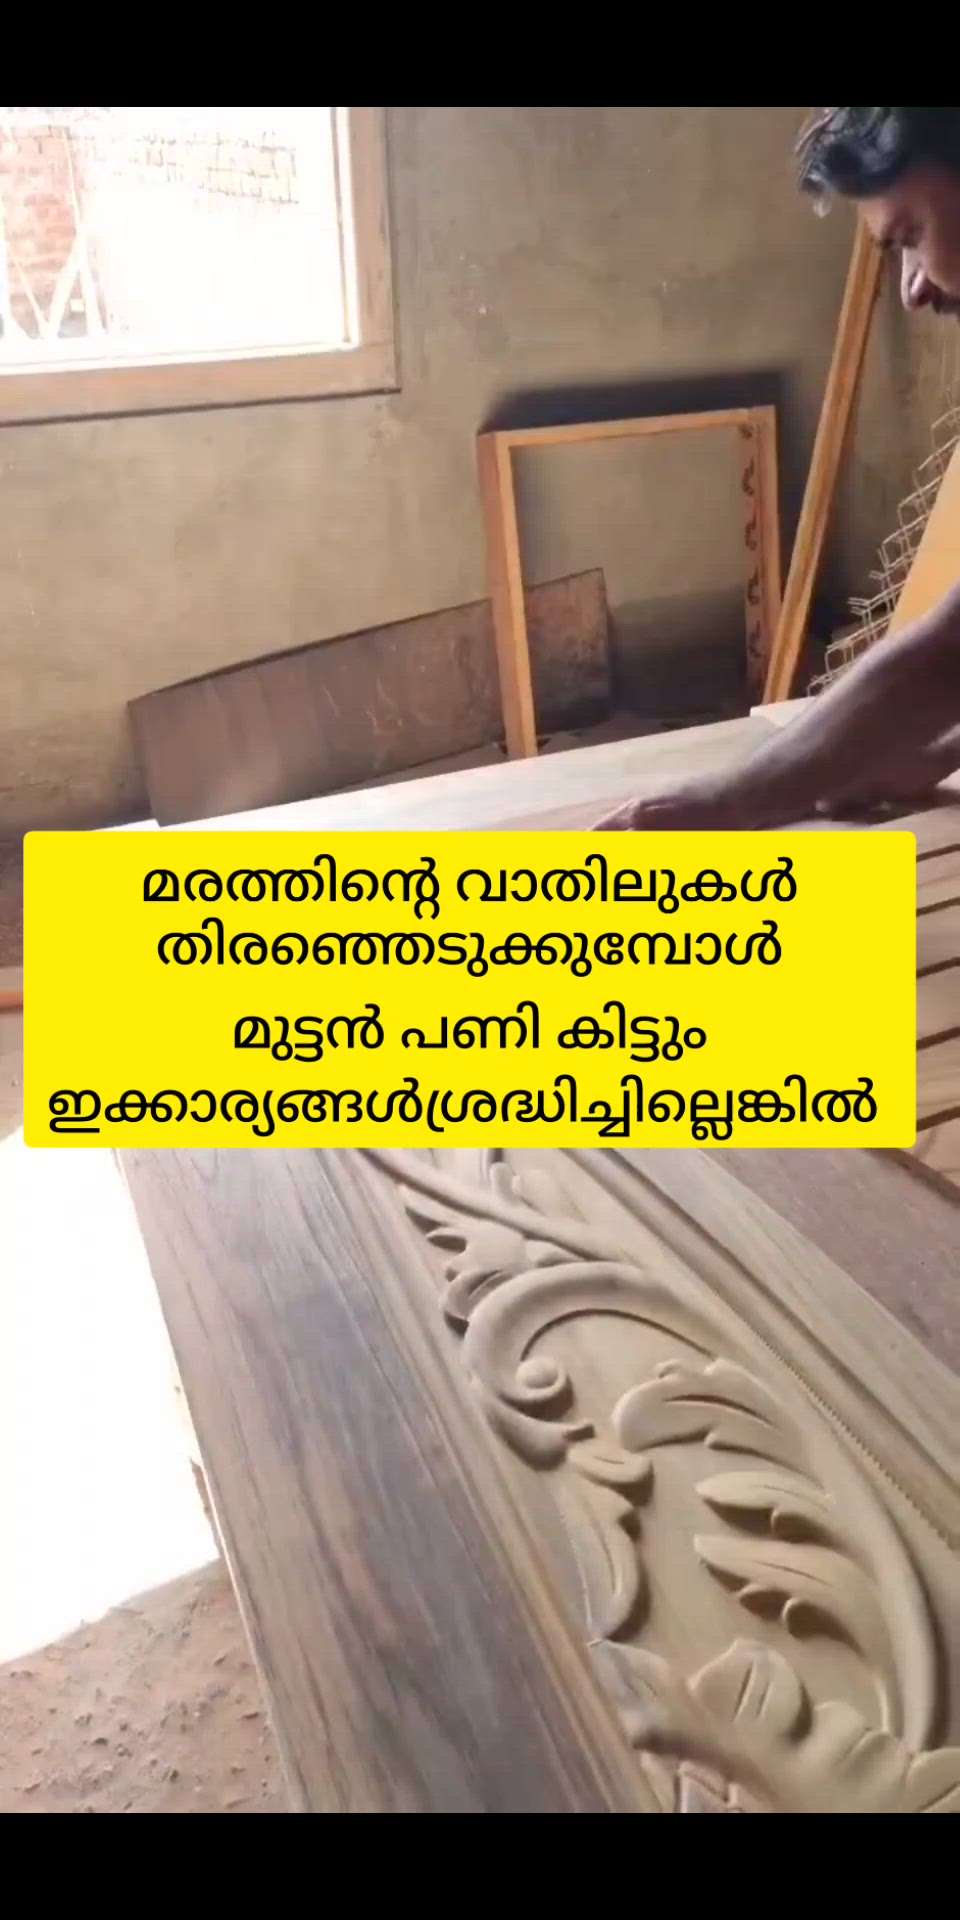 #creatorsofkolo #doors #buy #rightdoors #woodendoors #frontdoors #wood #furnitures #kolo #trending #viral
things u should consider when u buy wooden doors